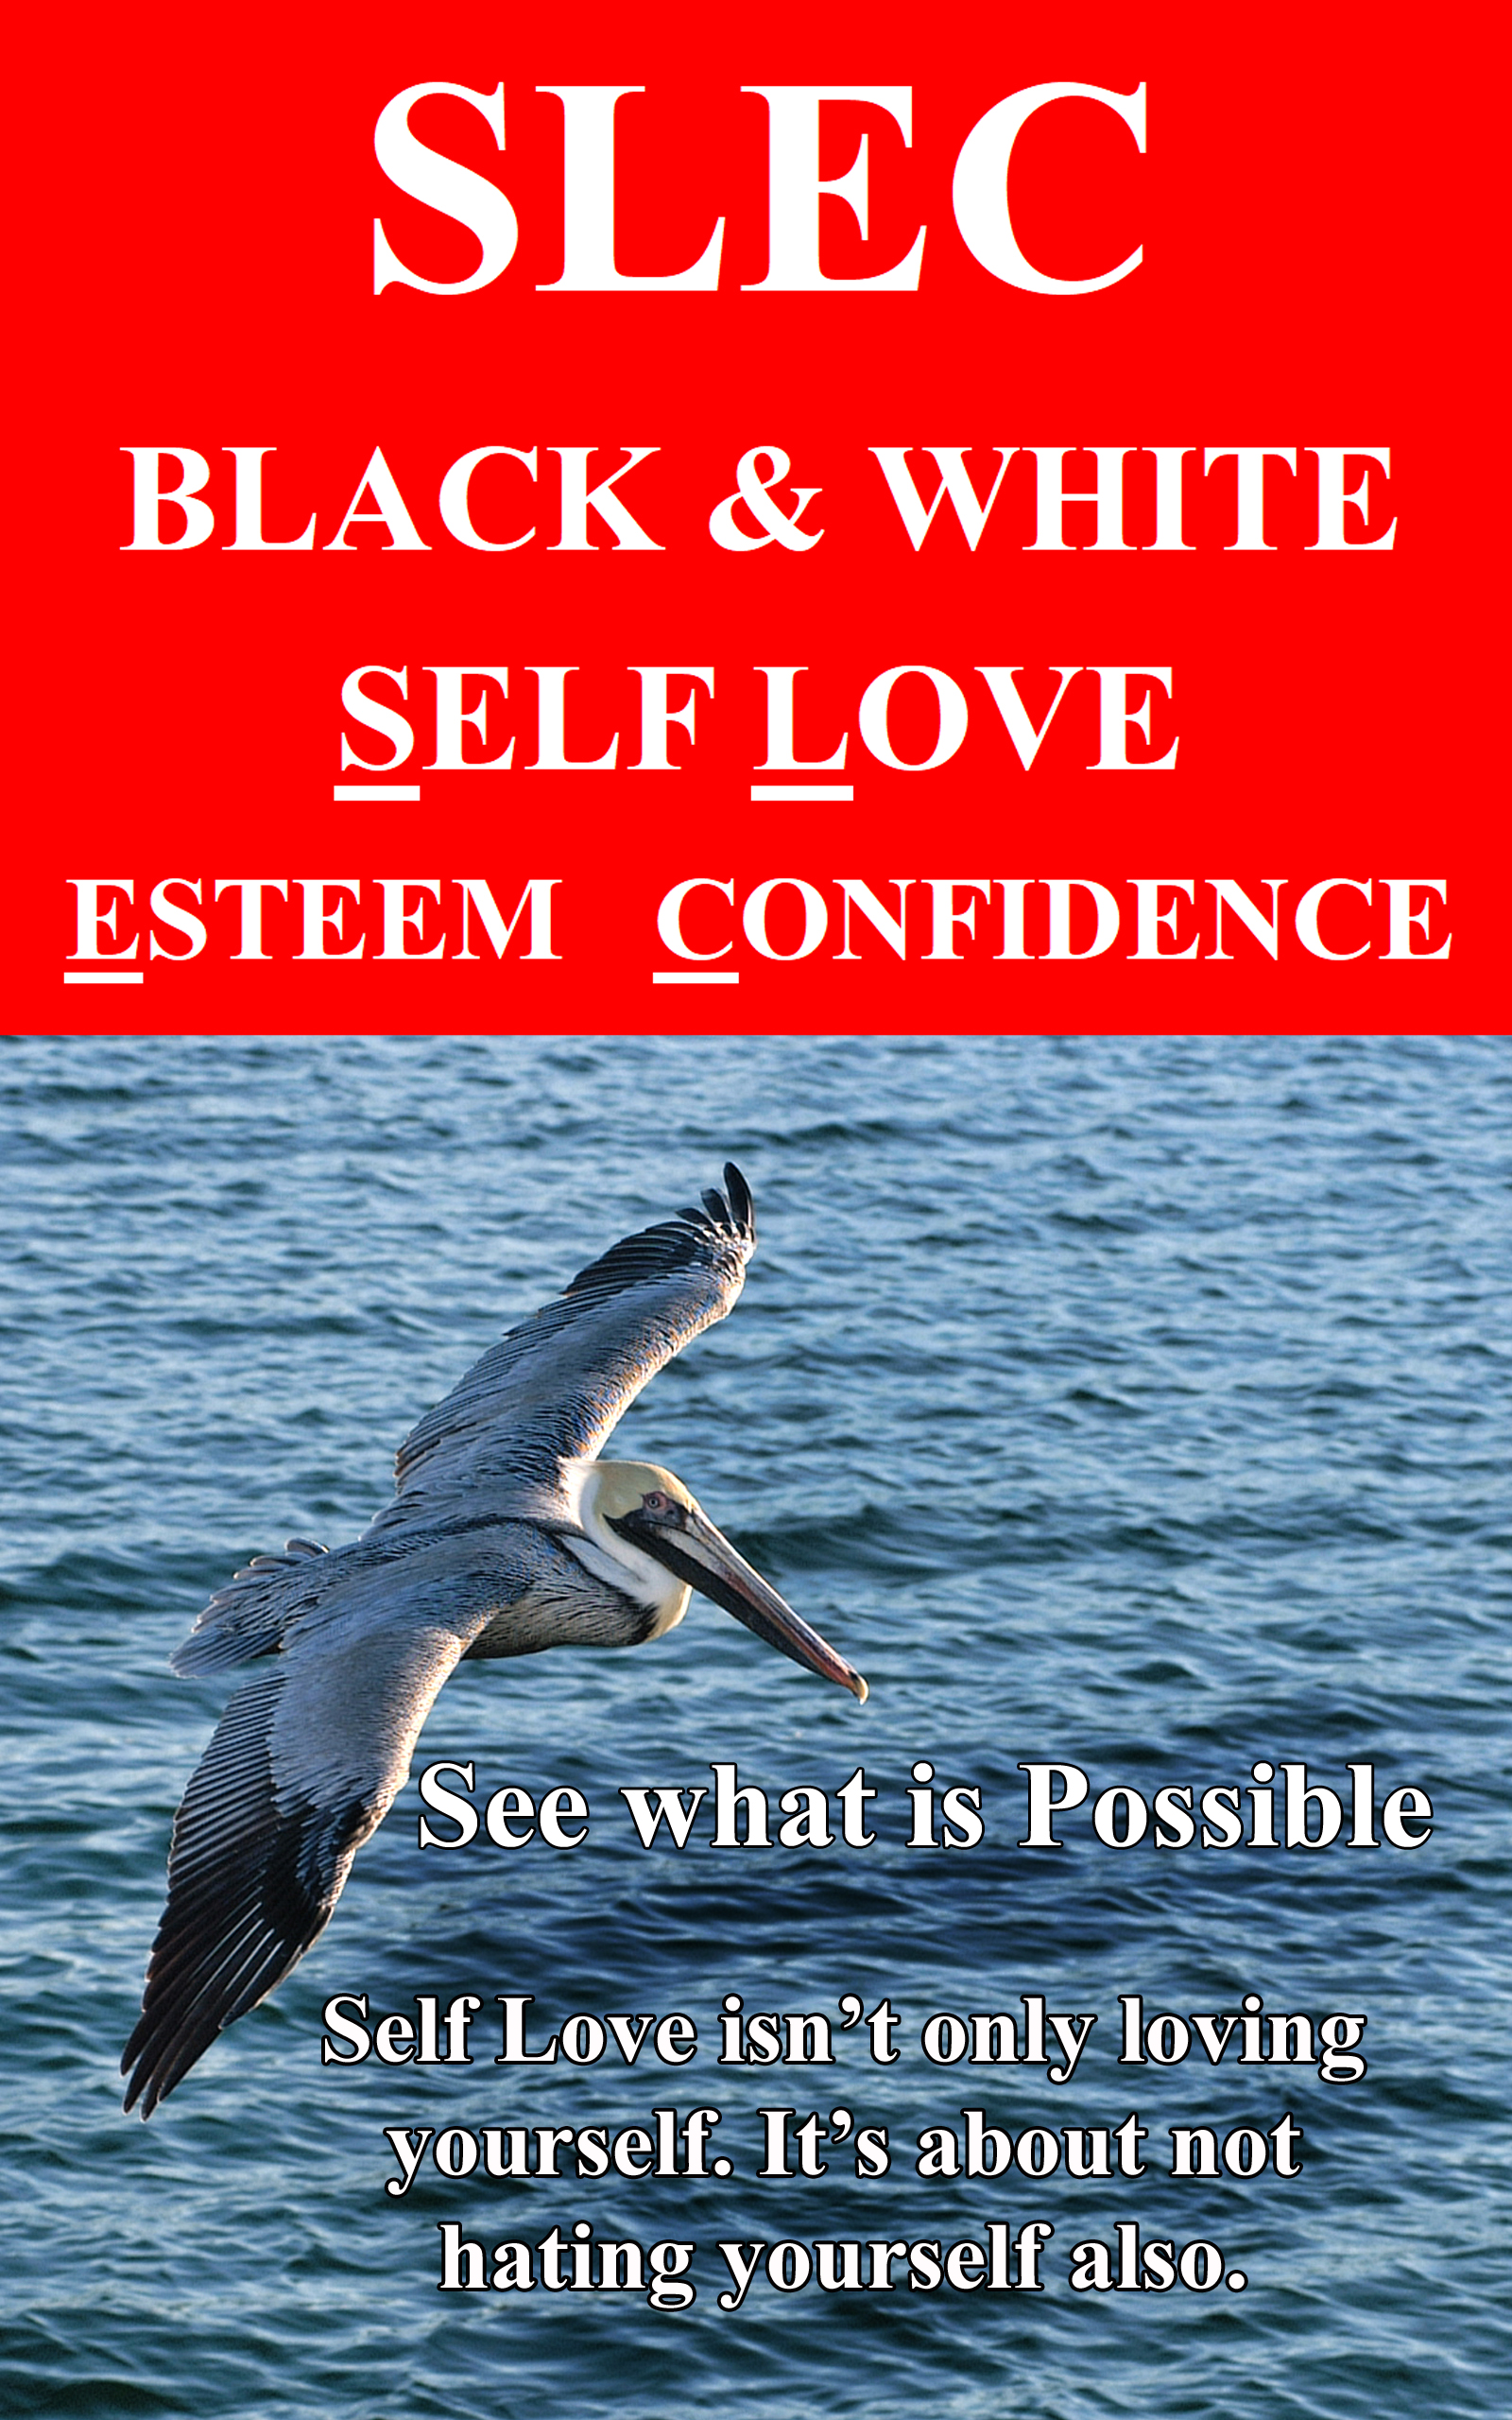 self,love,esteem,confidence,ebook,selftalk,self,talk,happy,mind,program,health,natural,feel,good,